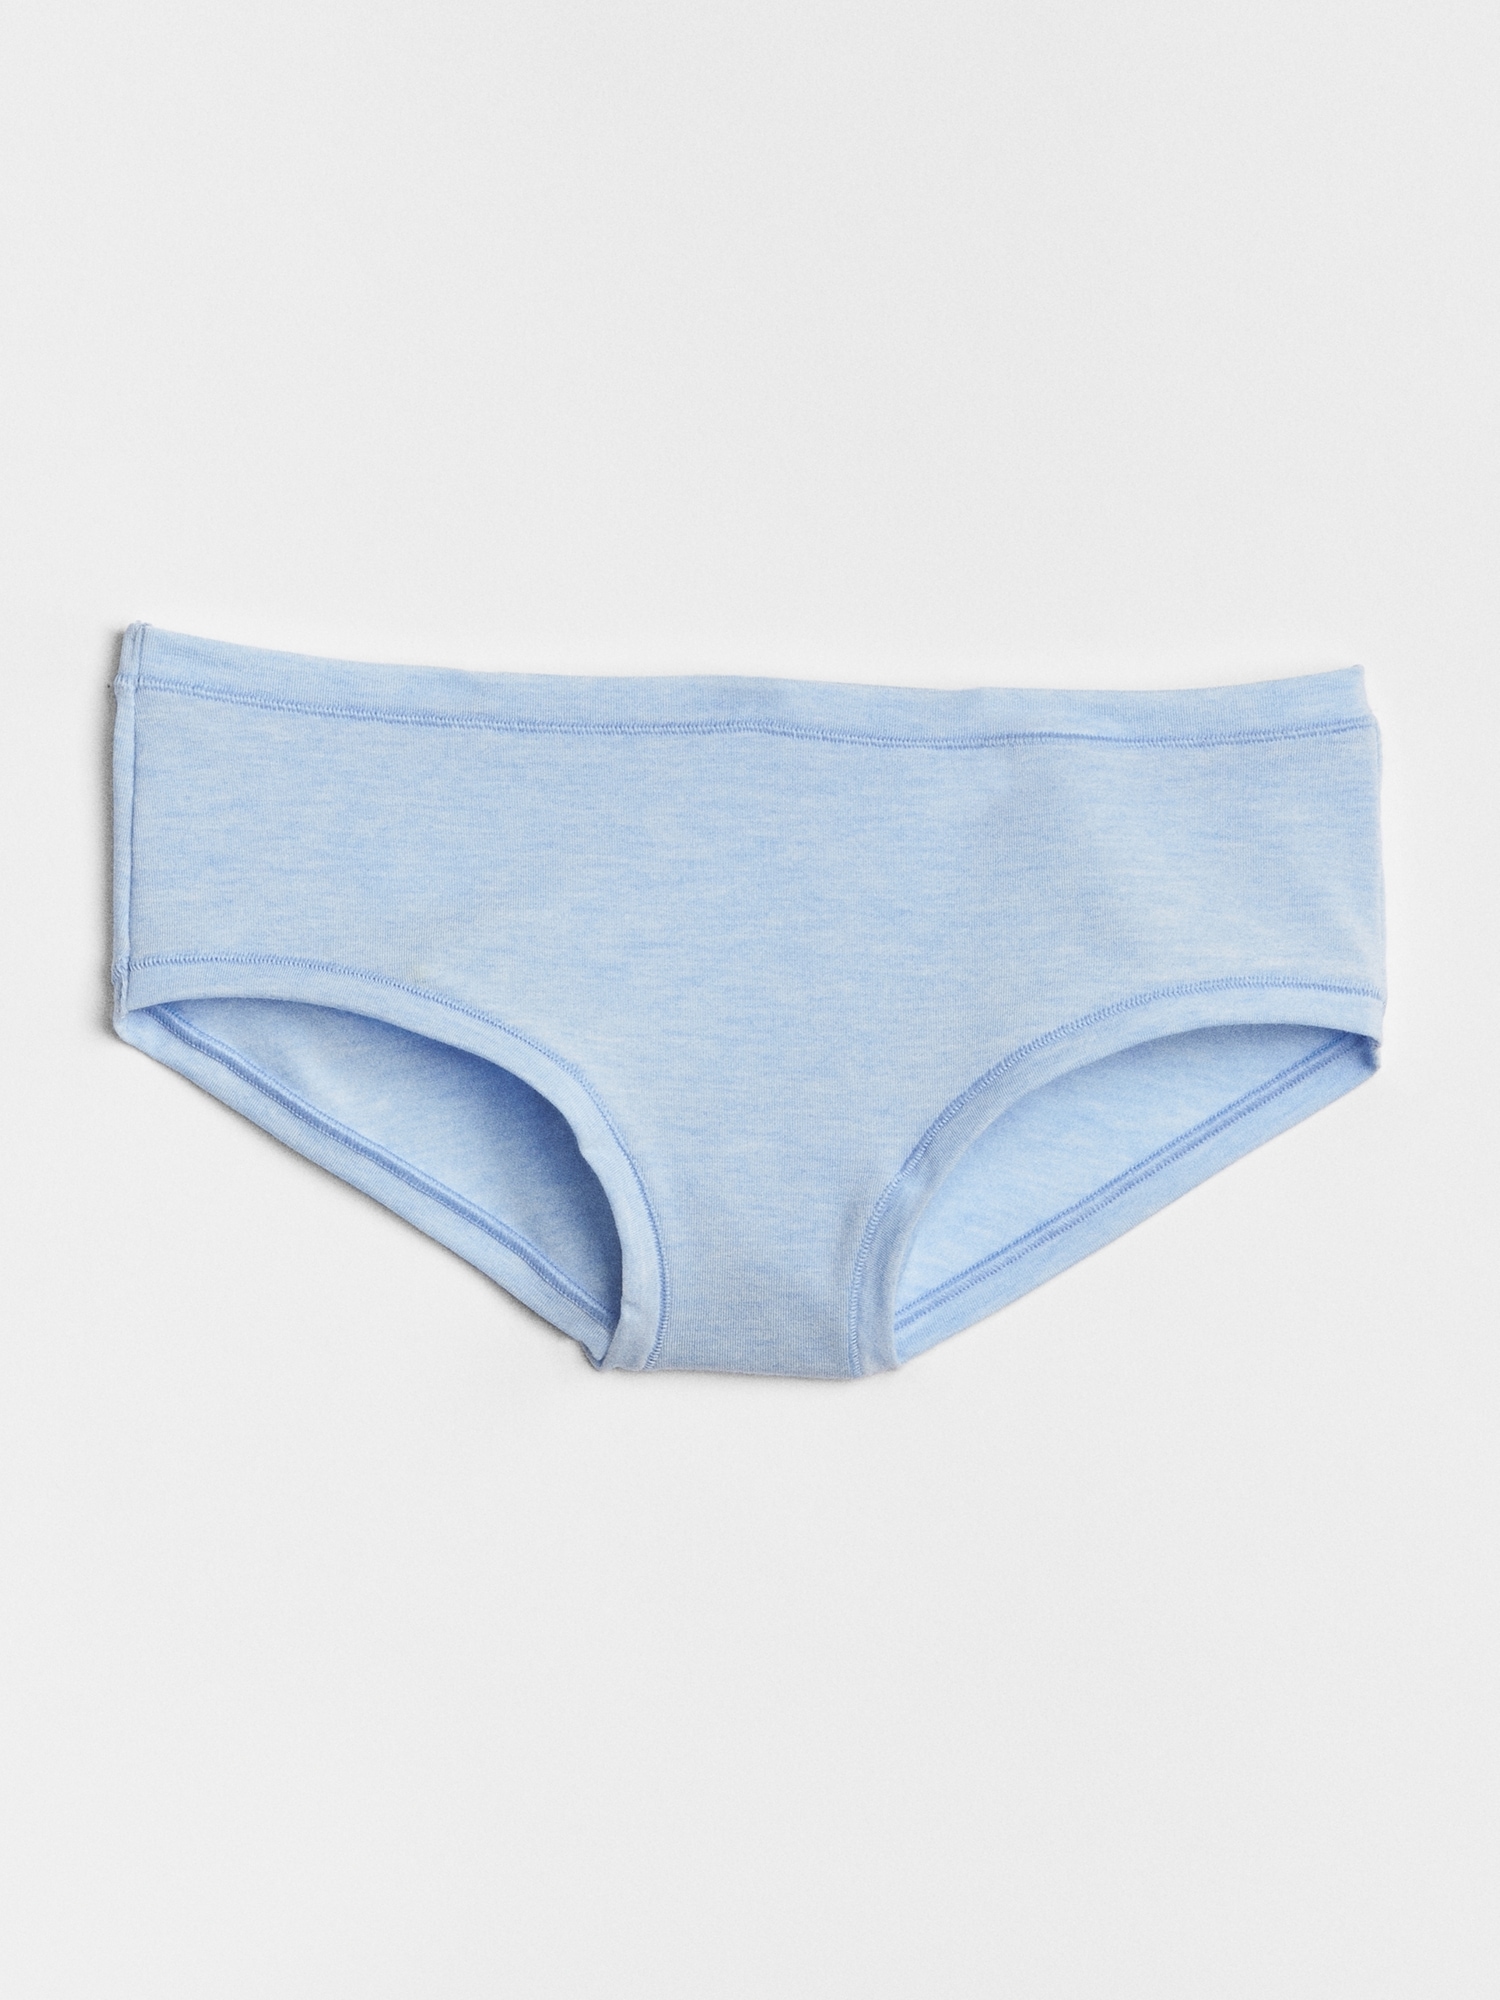 GAP Women's 3-Pack Breathe Hipster Underpants Underwear, Multi